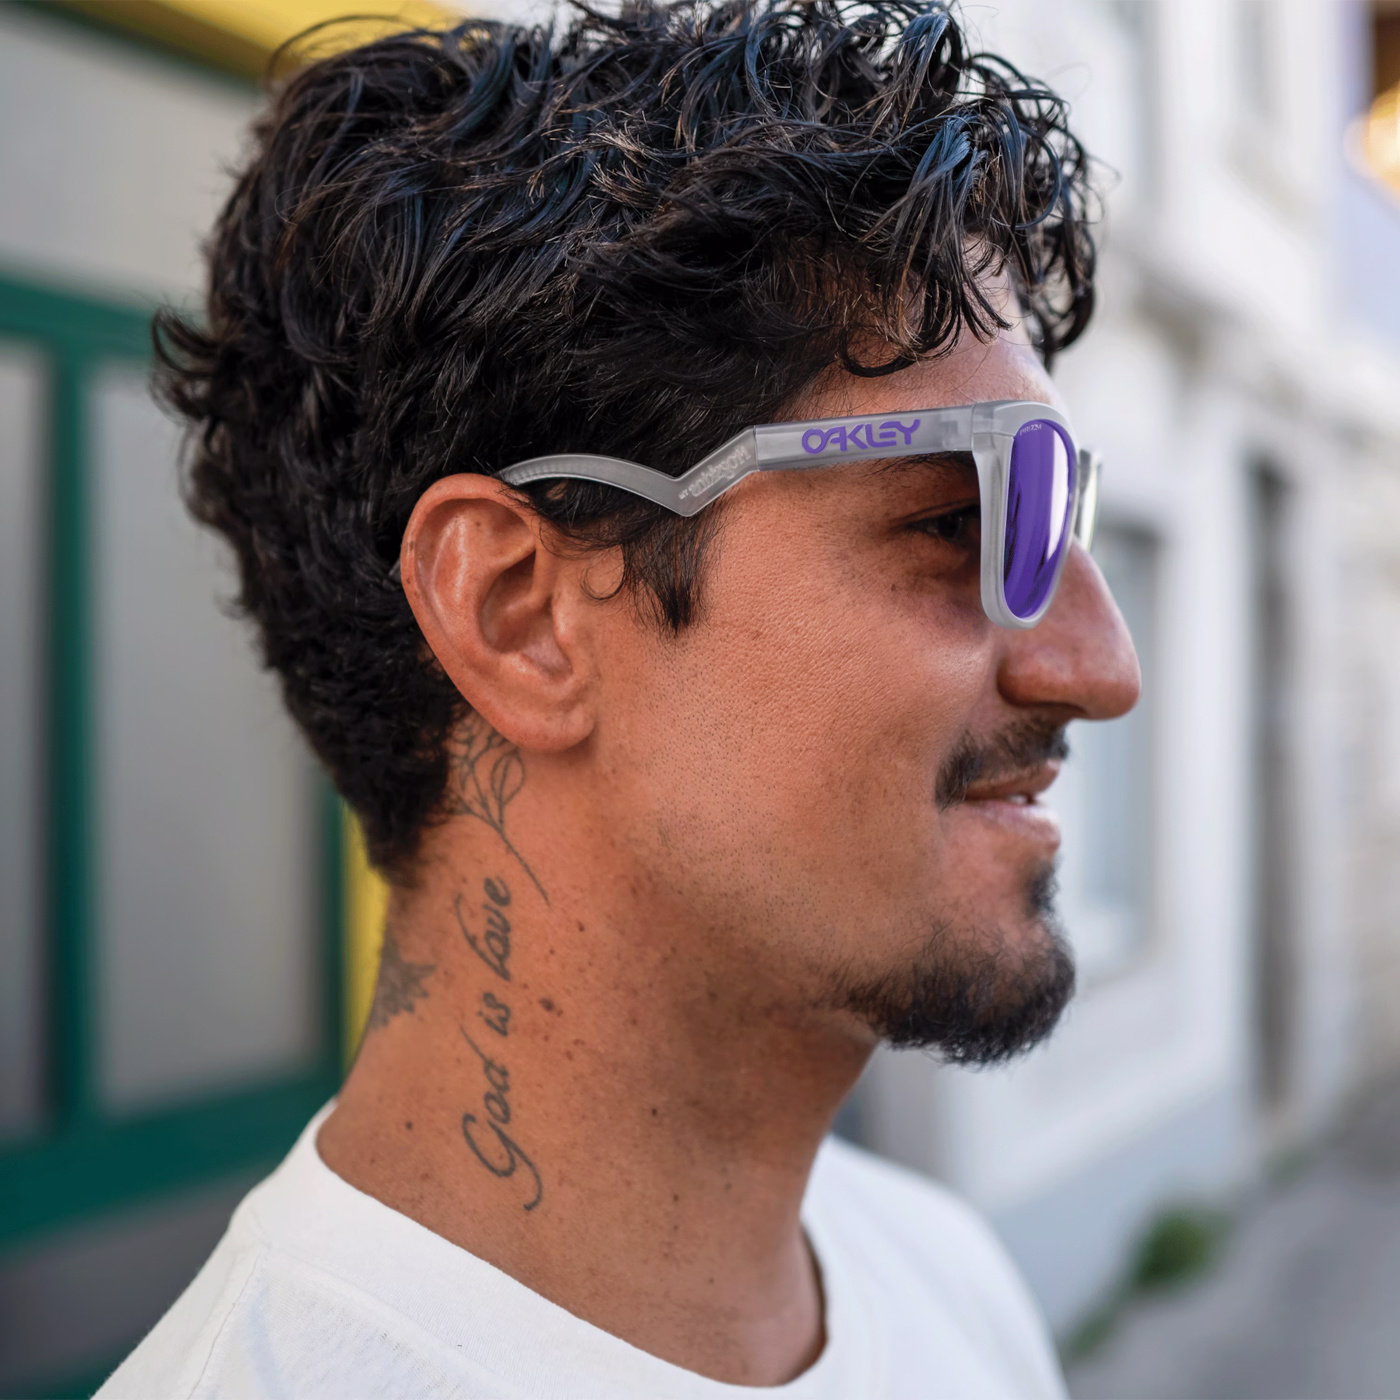 Oakley Frogskins Hybrid Sunglasses - Matte Lilac/Violet - MODA3